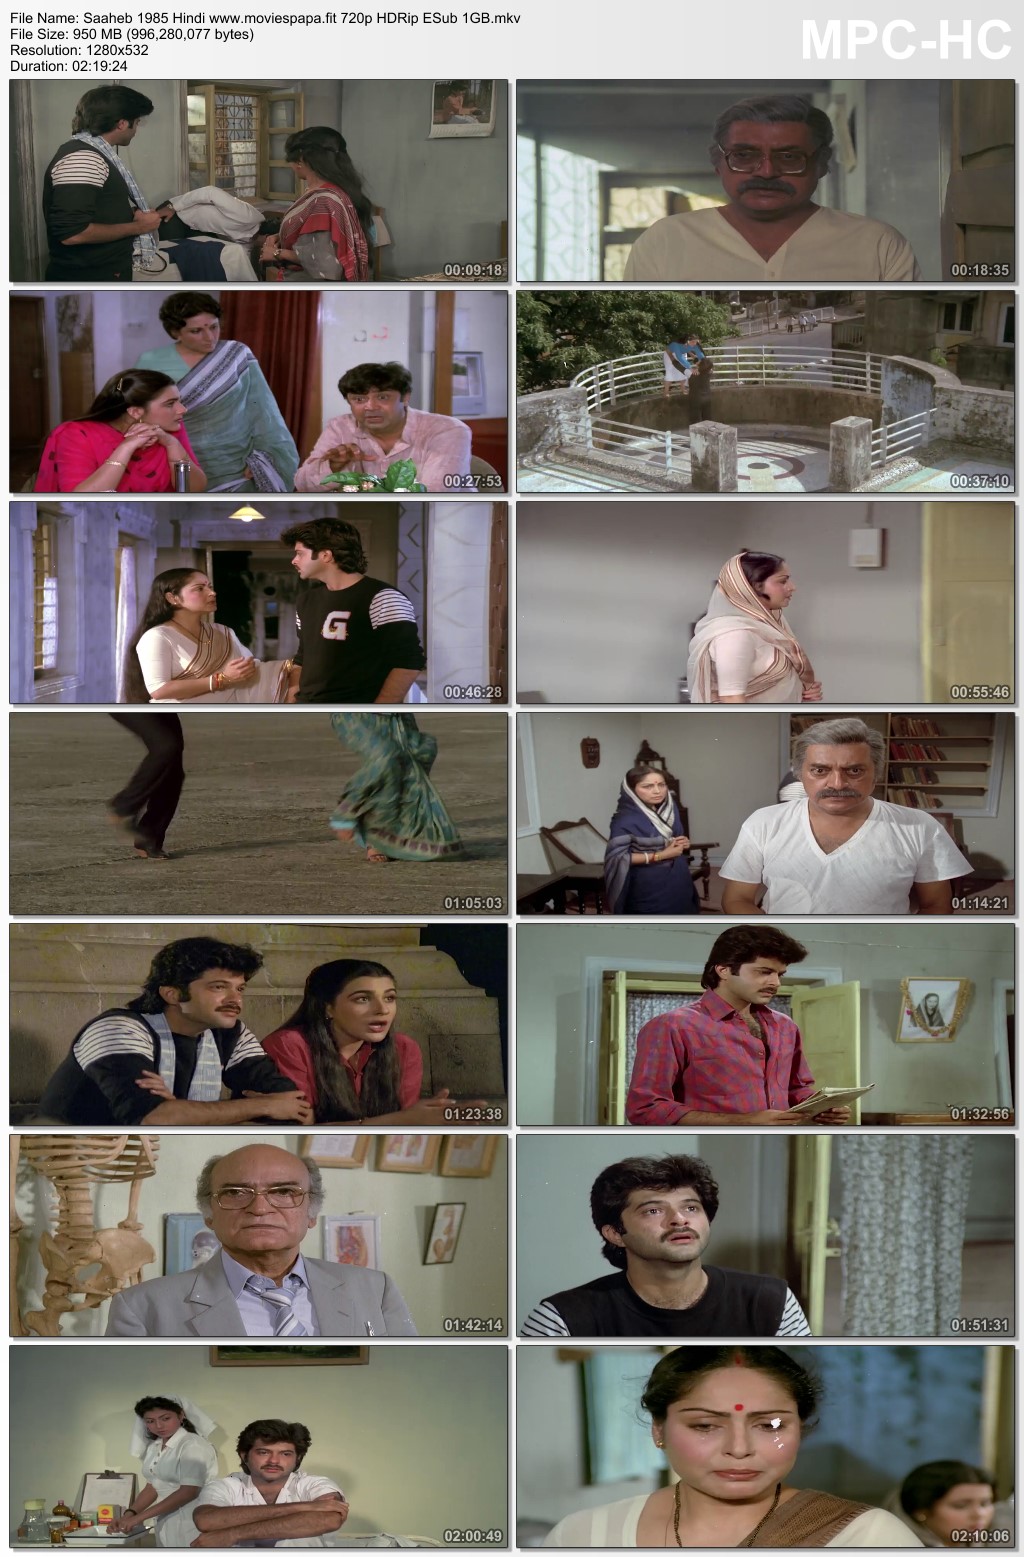 Saaheb 1985 Hindi 720p HDRip ESub 1GB Download | Moviespapa